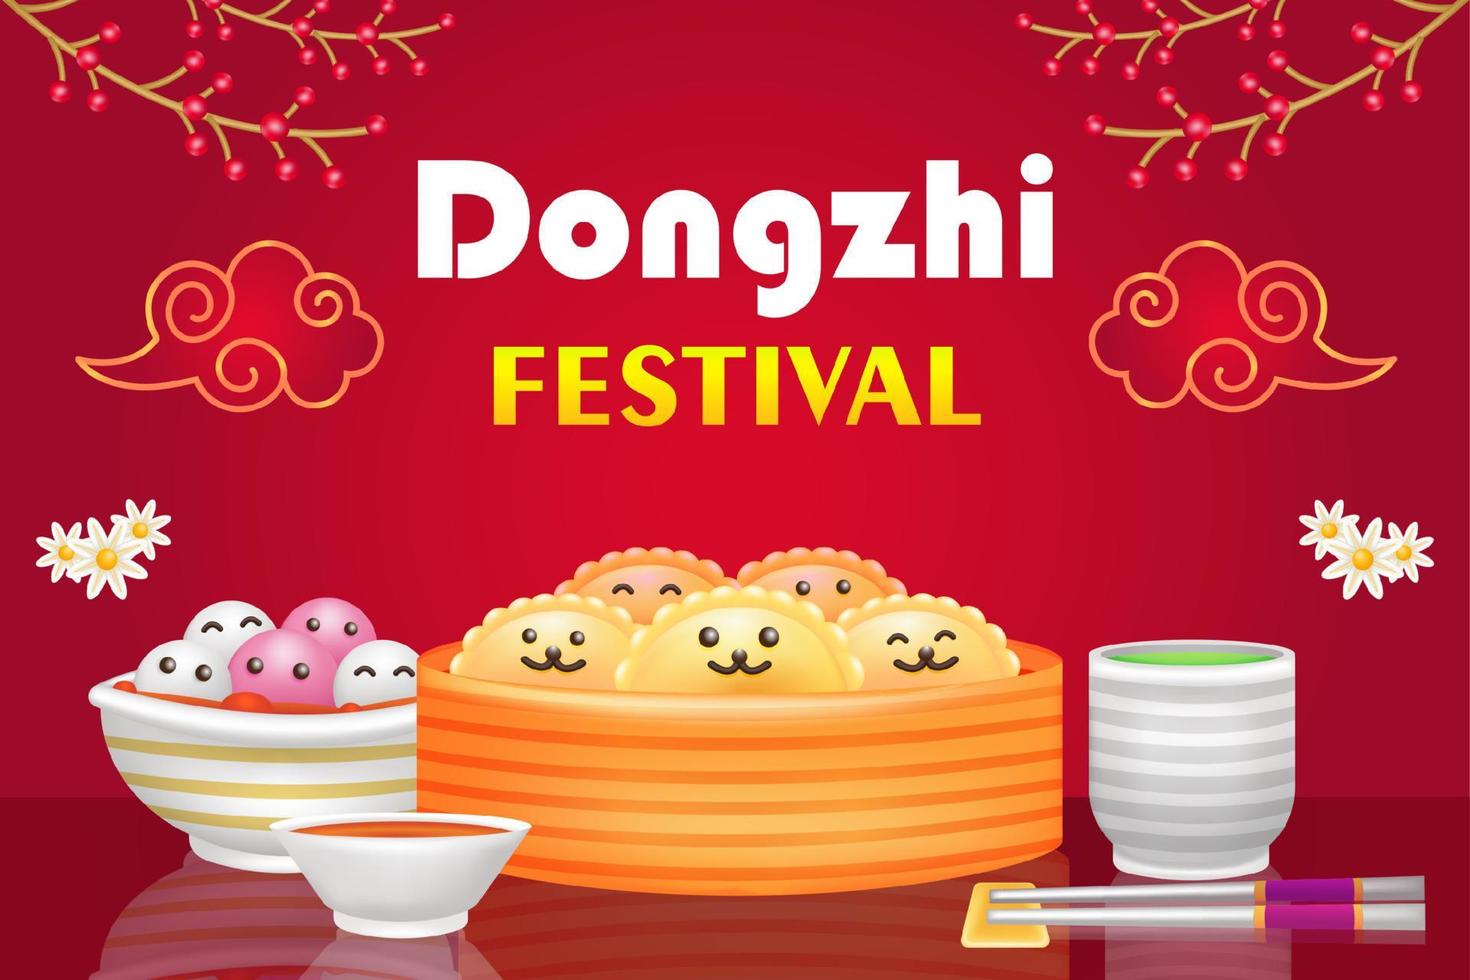 Dongzhi Festival. 3d illustration of steamed dumplings with sauce, sweet soup dumplings, green tea and cute cloud pattern ornament vector